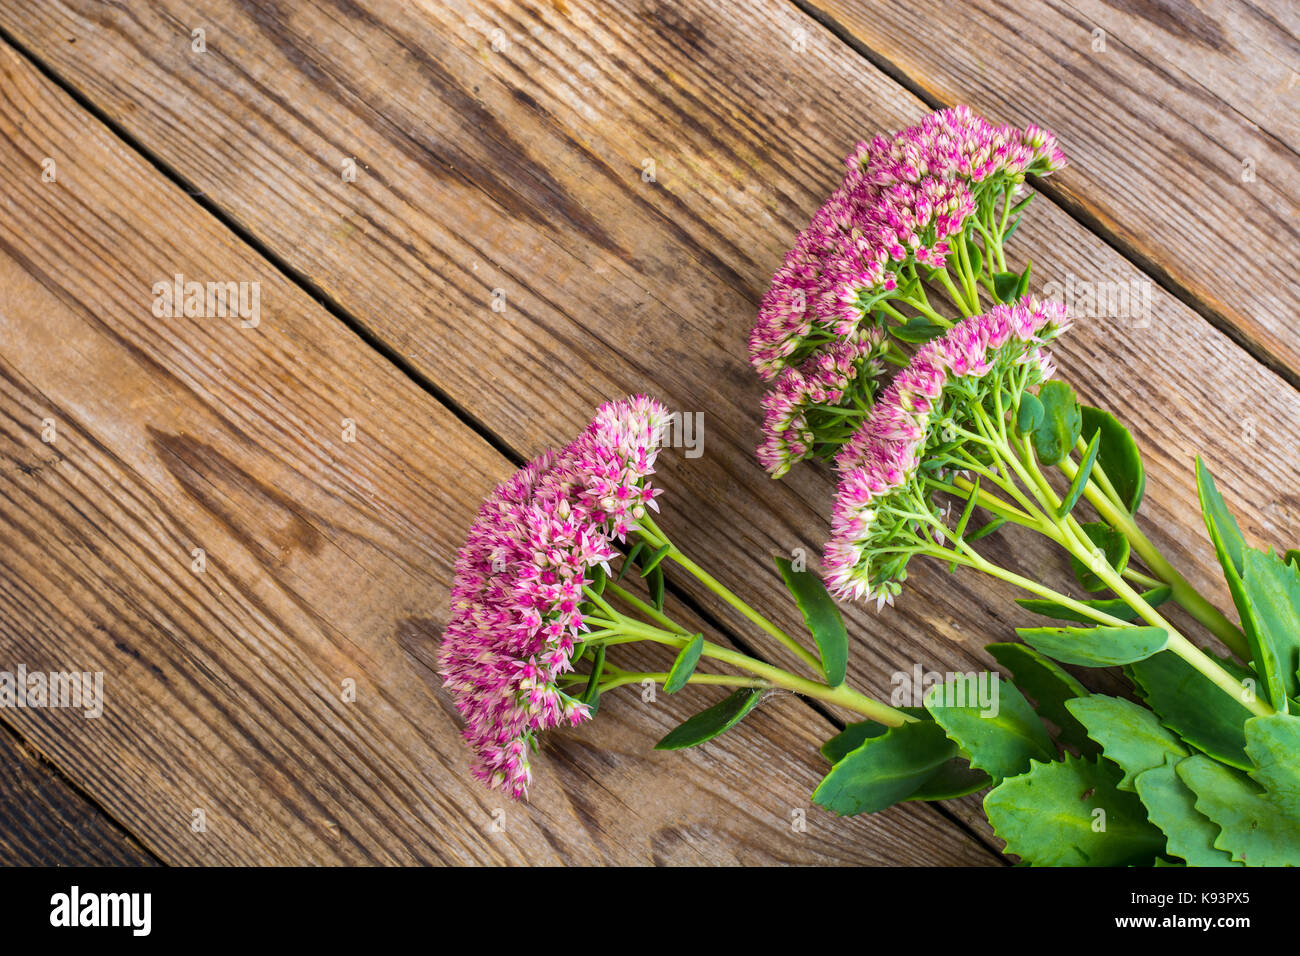 Garden and medicinal flower Sedum. Studio Photo Stock Photo